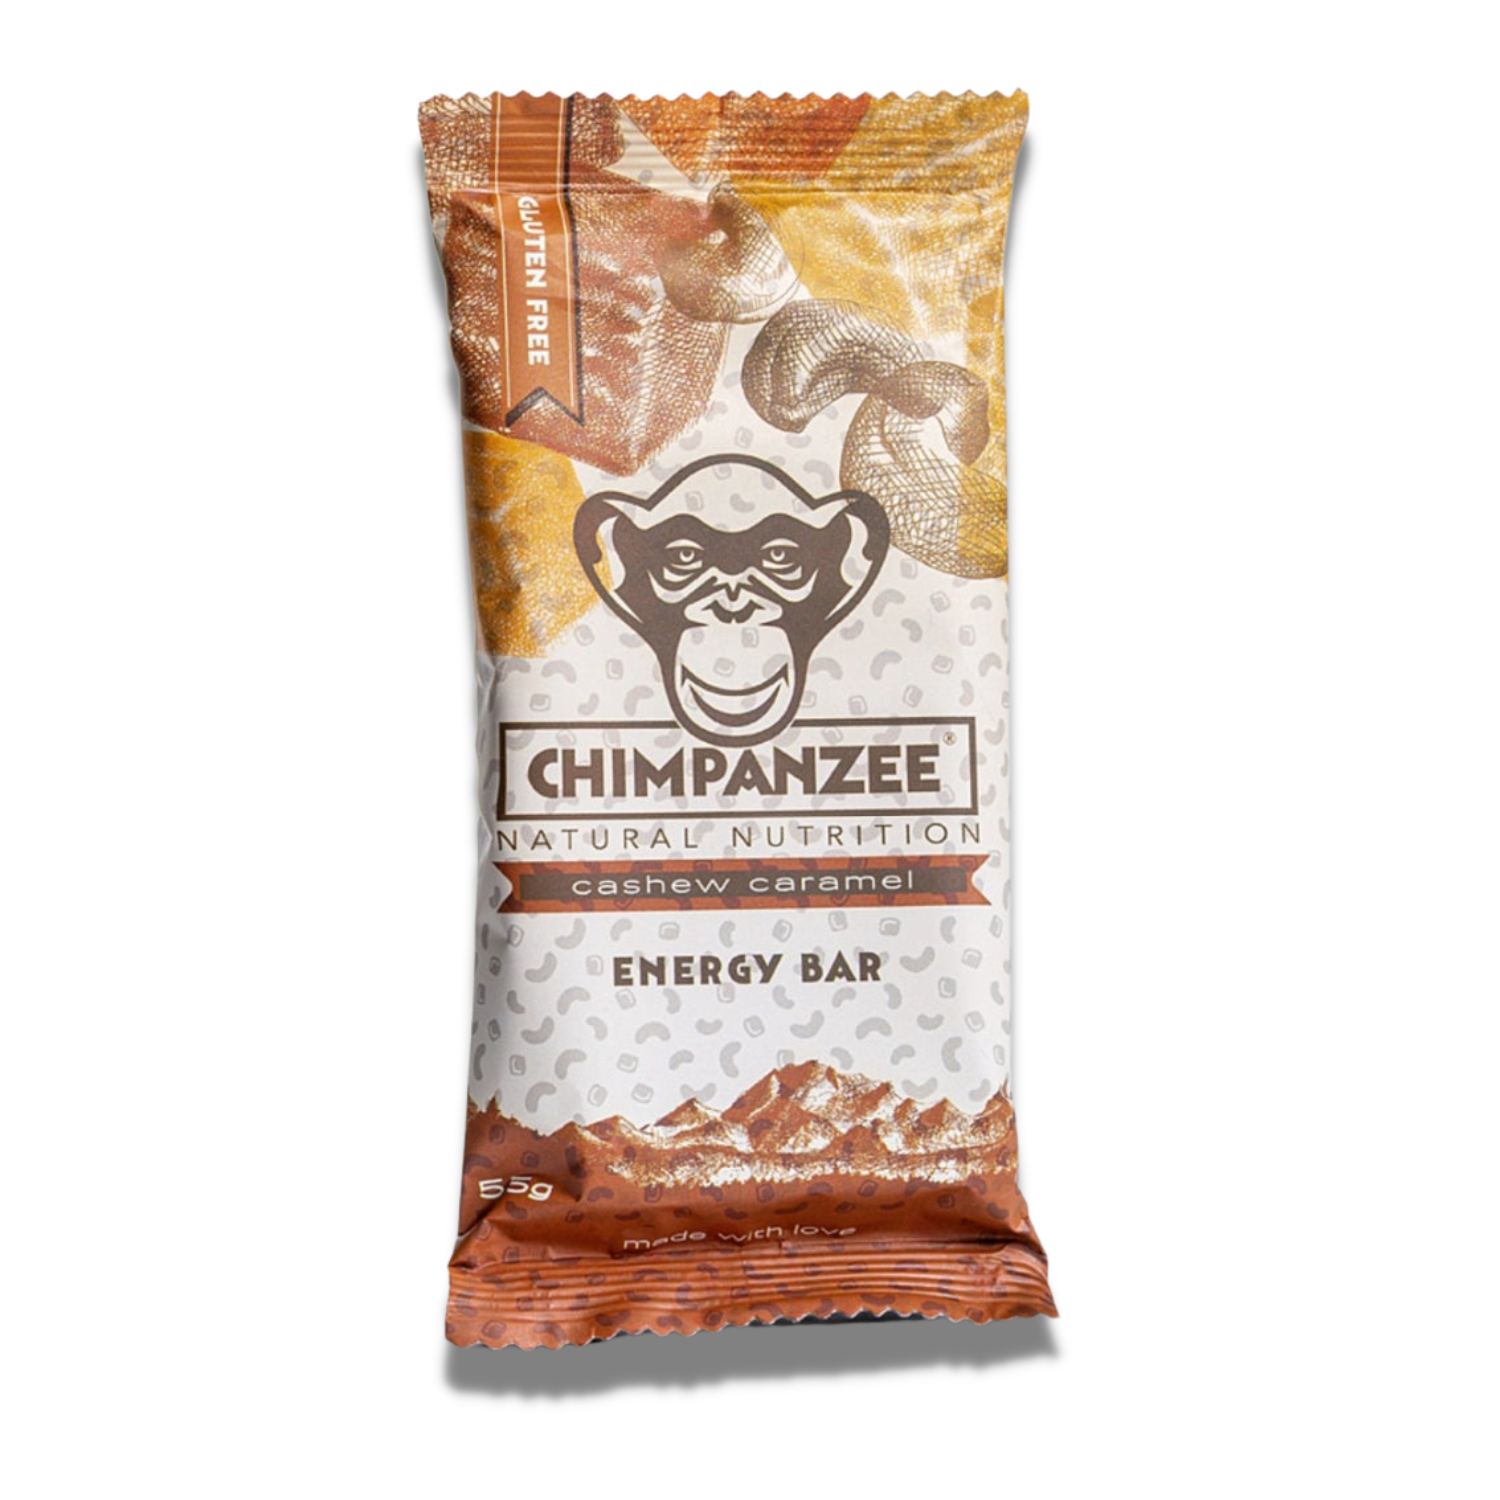 Chimpanzee Energy Bar - Cashew Caramel